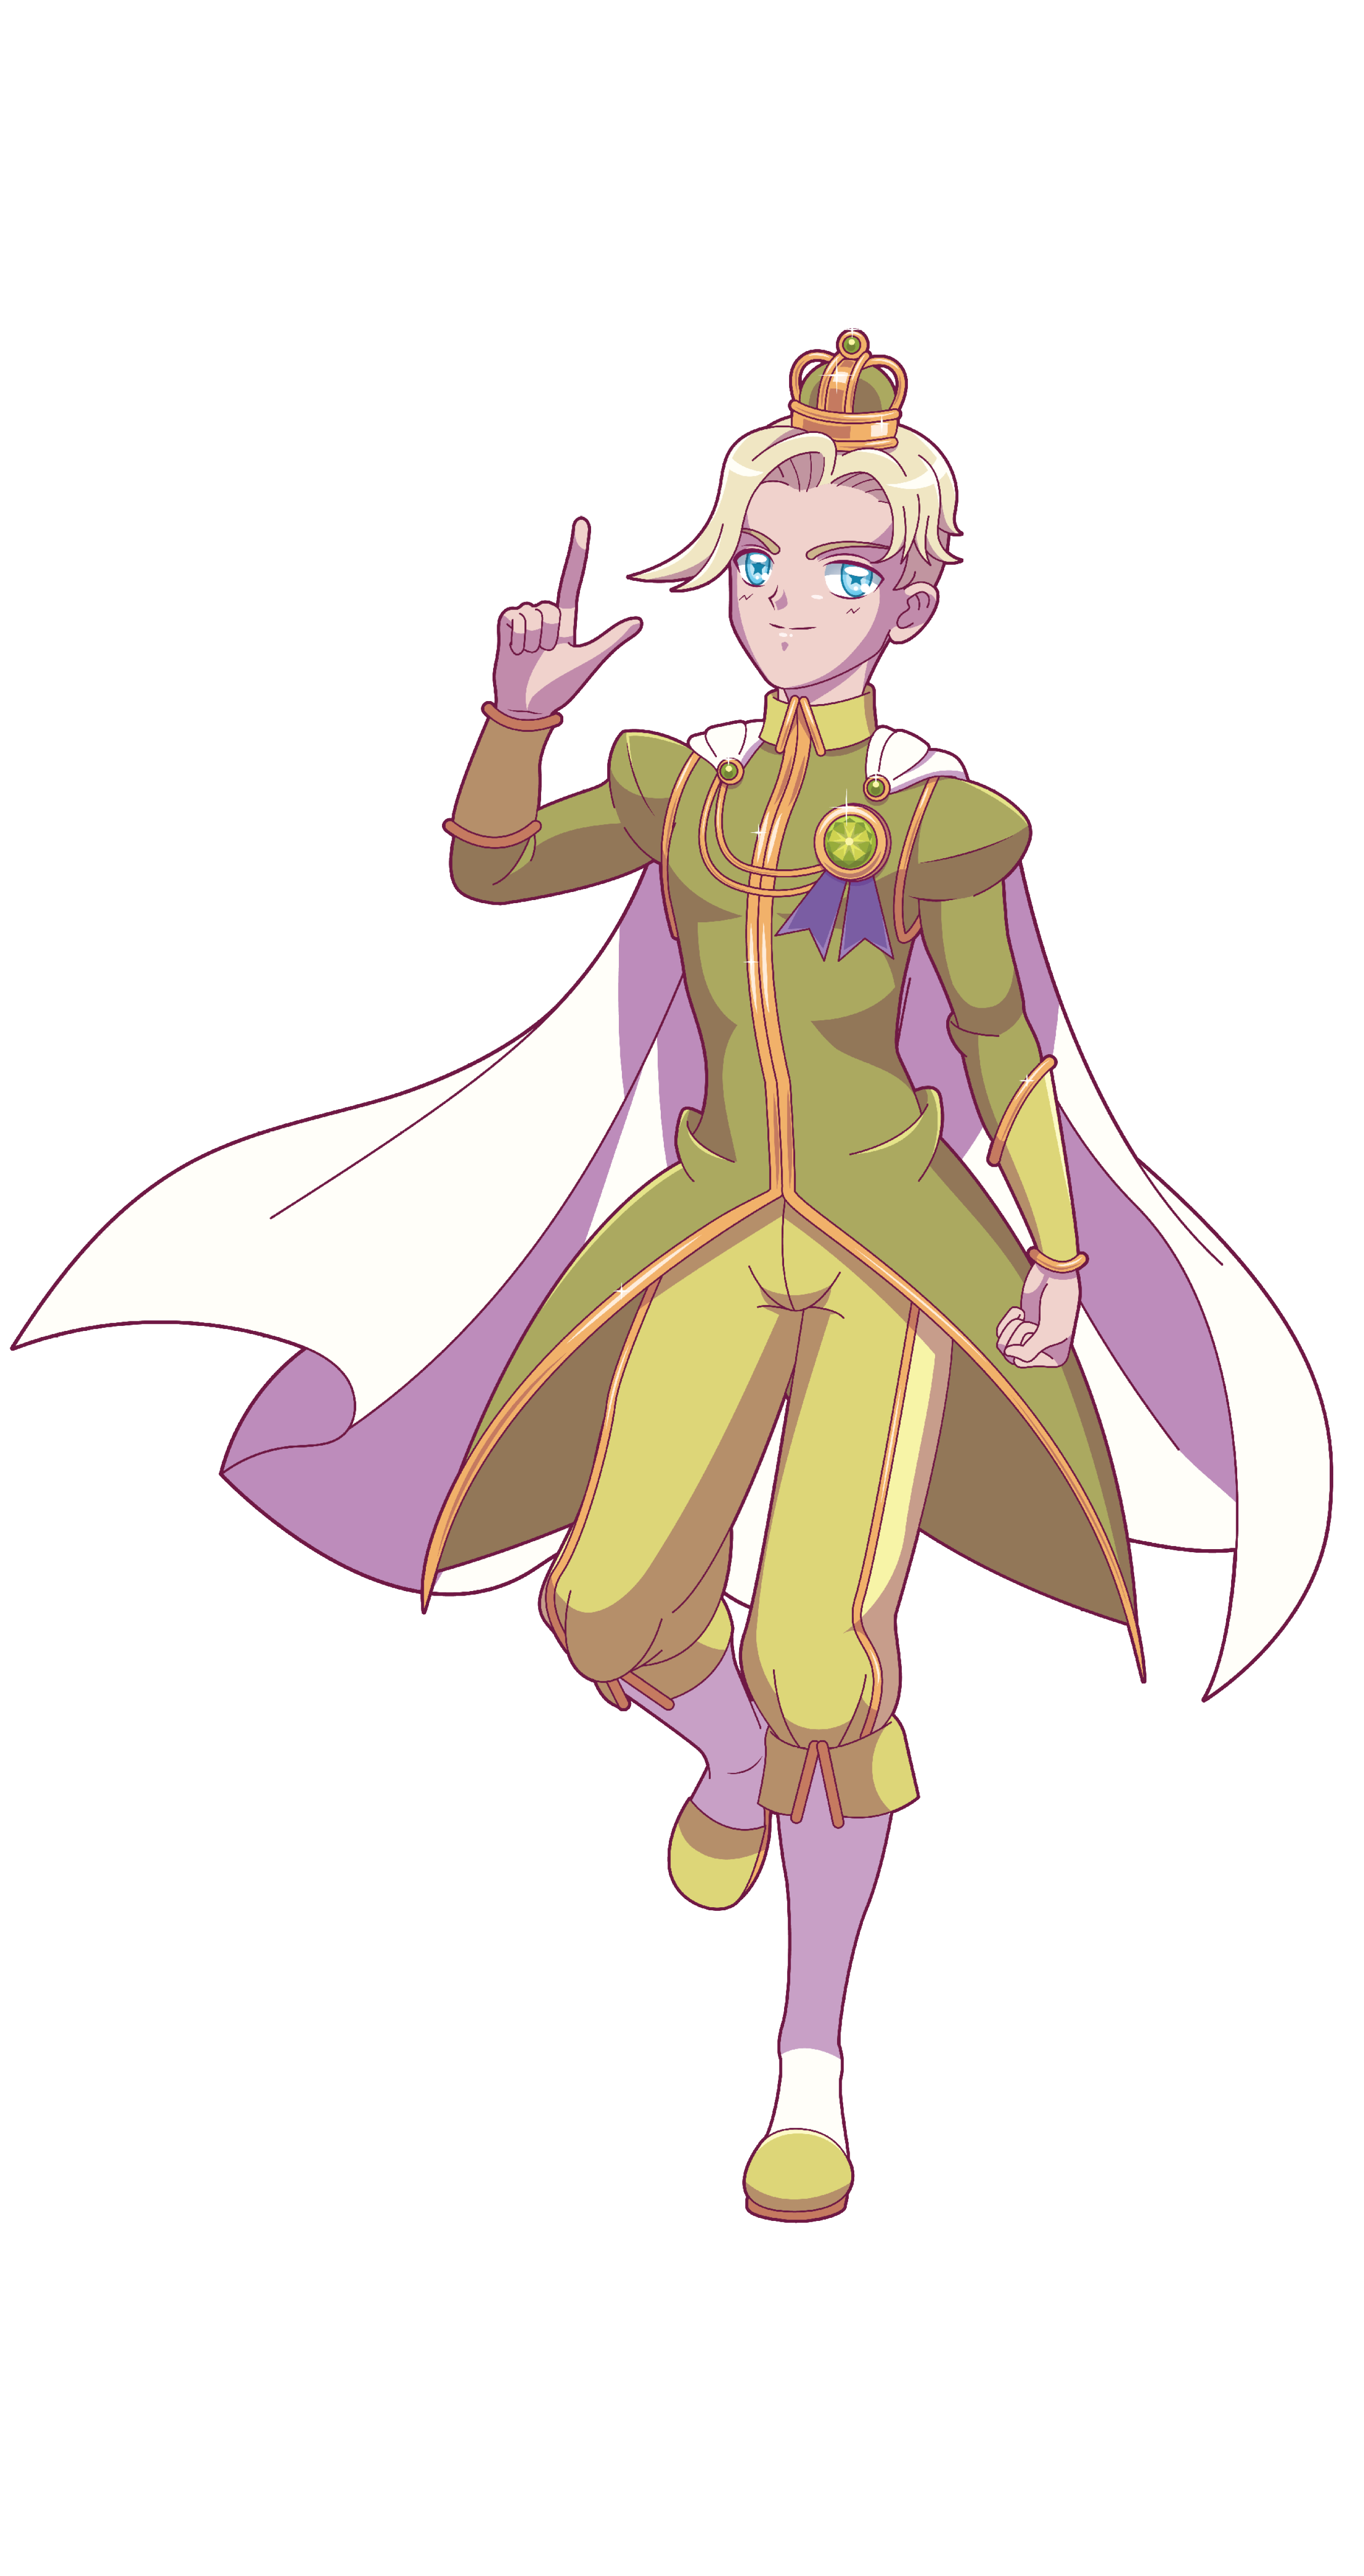 Prince Citron